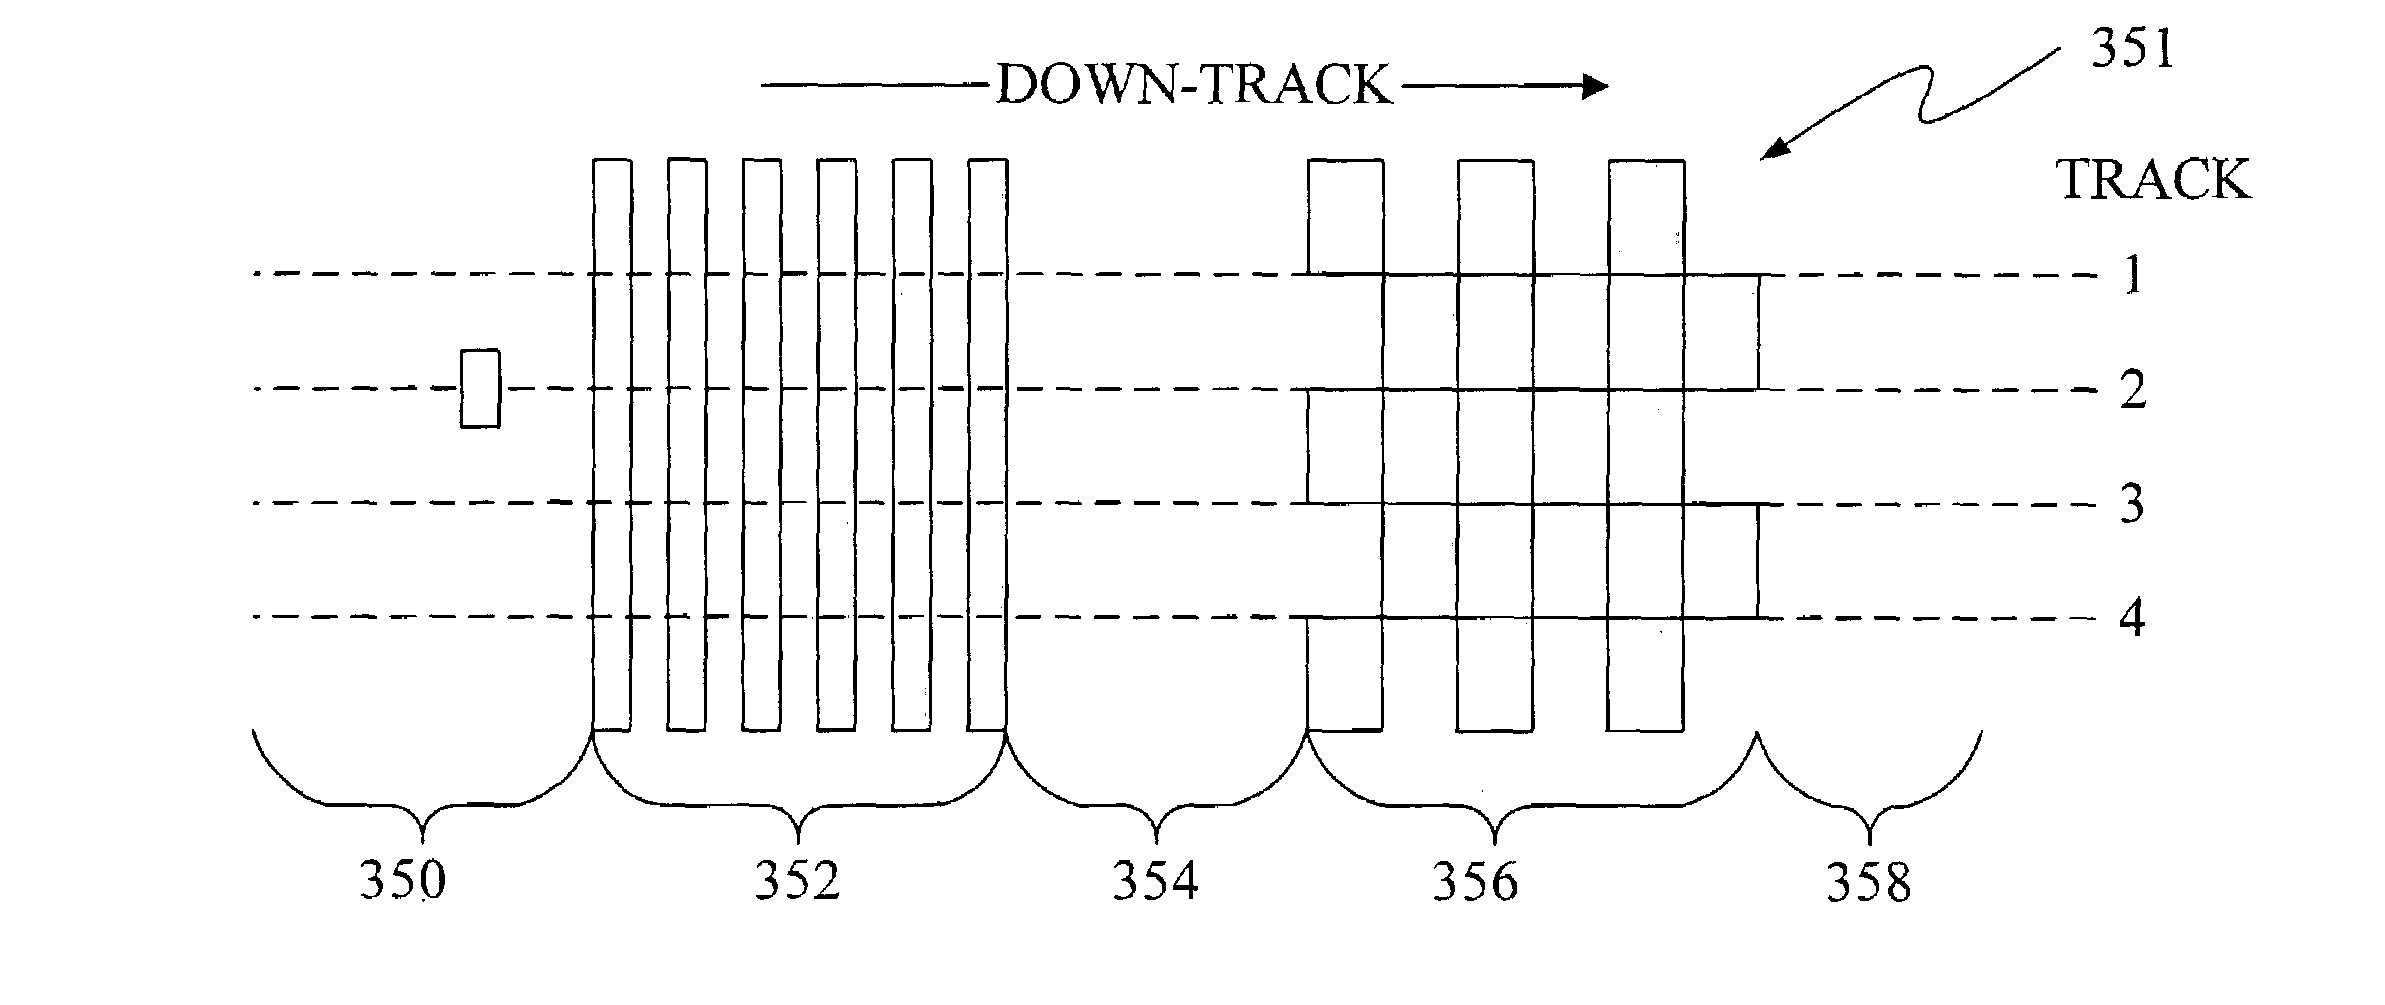 Bi-frequency servo pattern